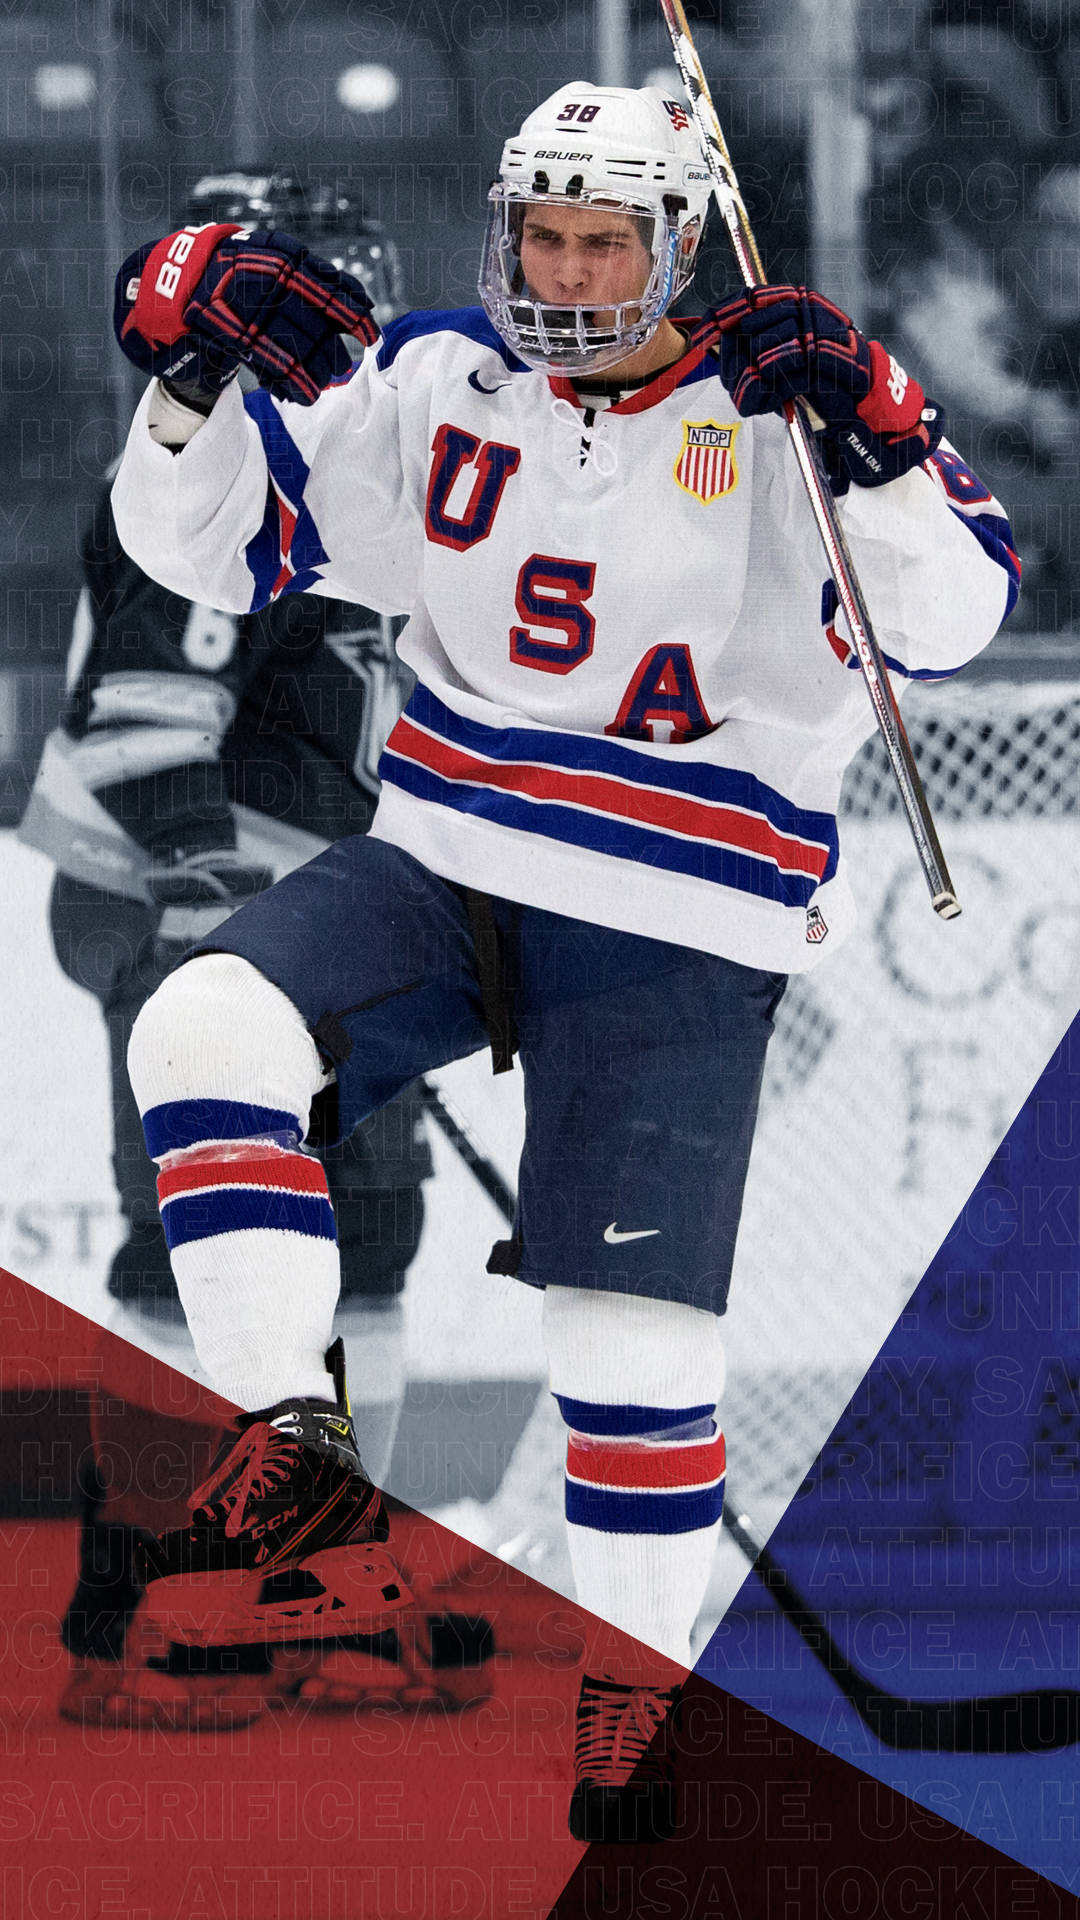 Stoltmedlem I Usa Hockey-laget. Wallpaper